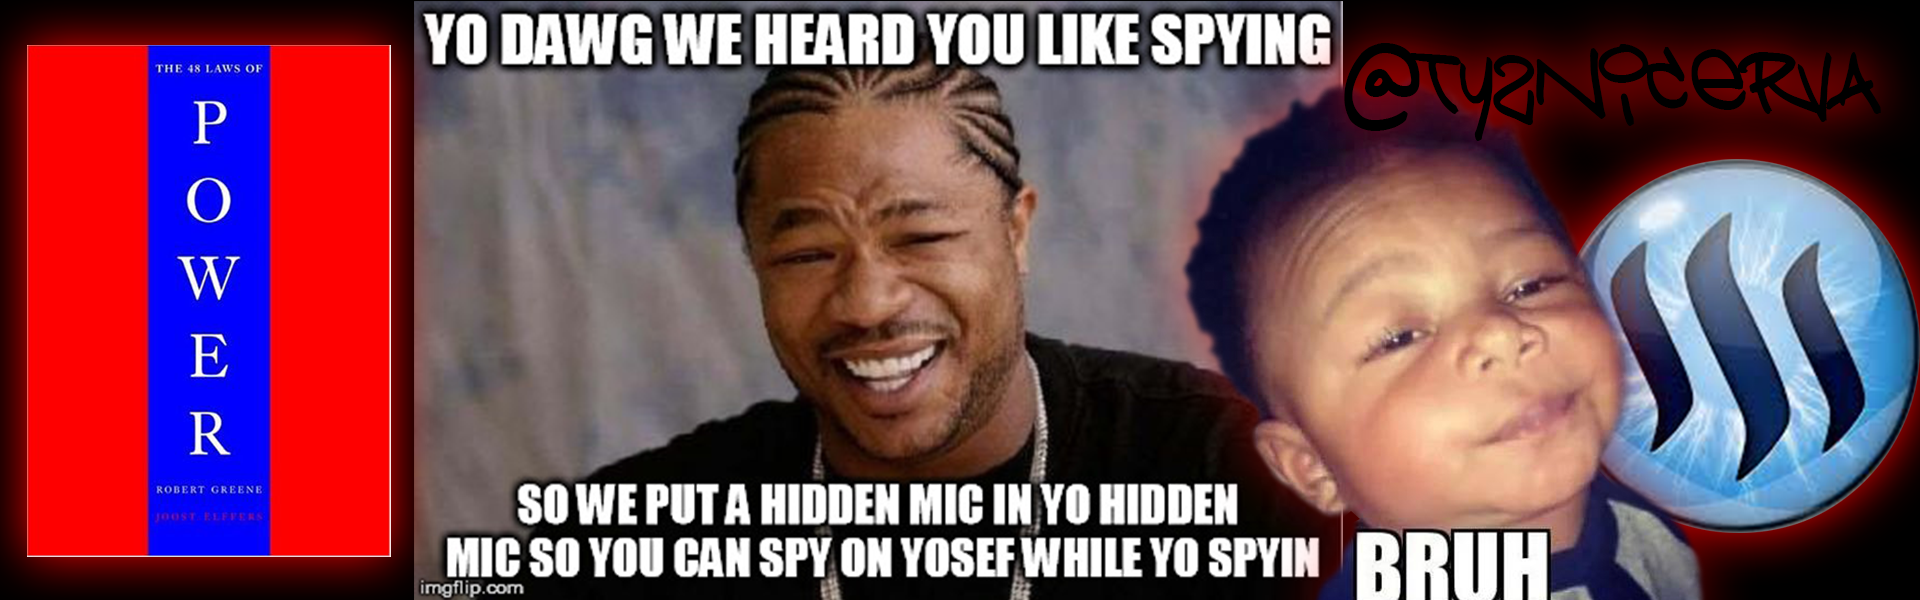 power spy legal